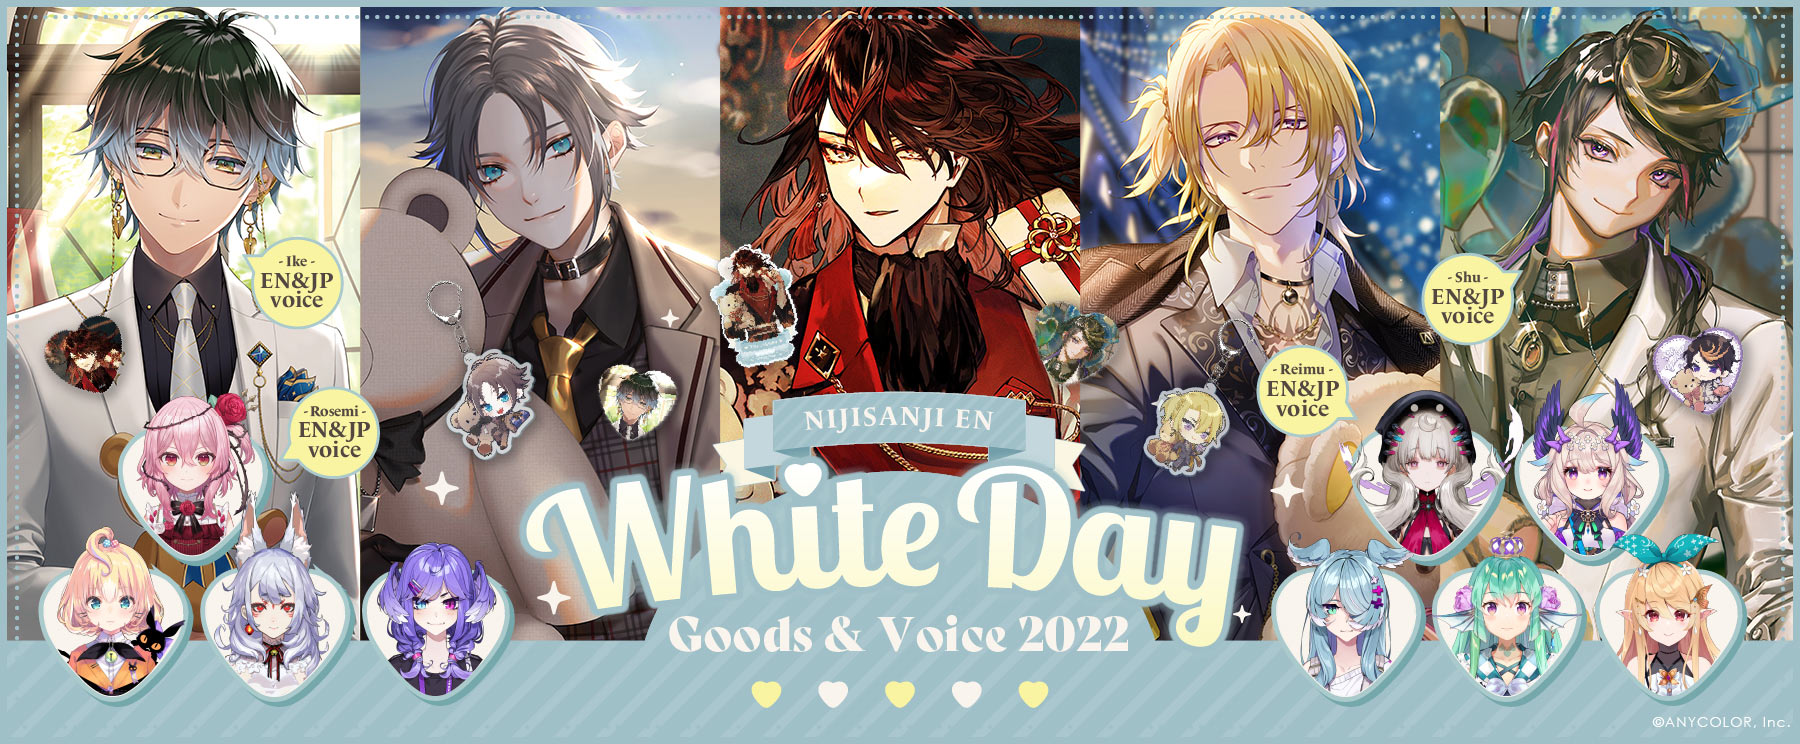 Whiteday Goods & Voice 2022 – NIJISANJI EN Official Store